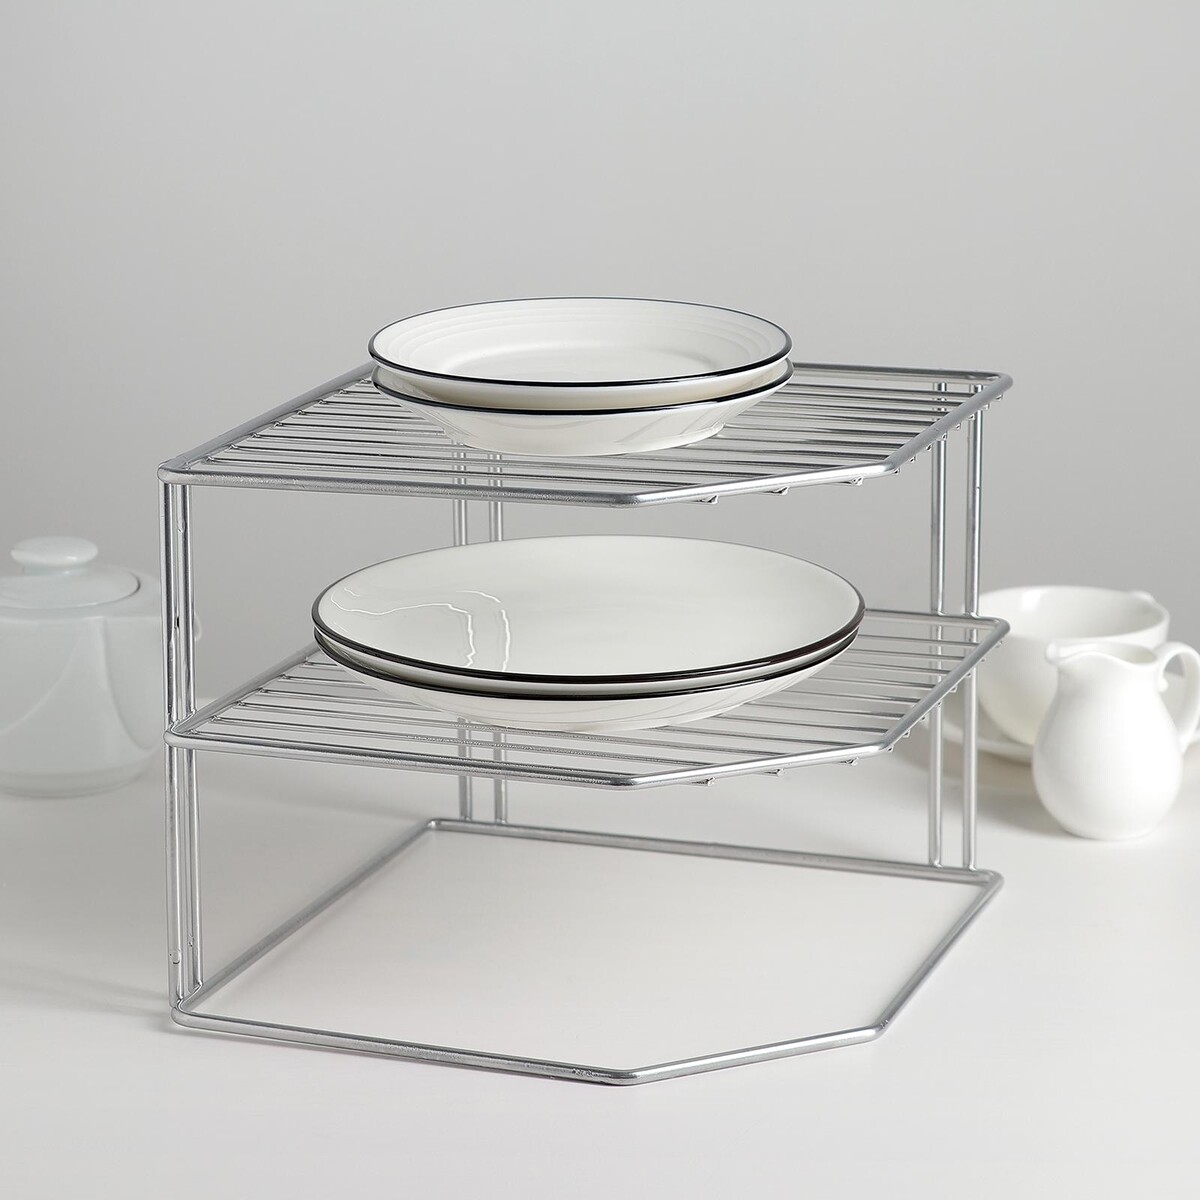 Подставка для посуды, 2 яруса, 25×25×20 см, цвет хром подставка для посуды 2 яруса 25×25×20 см хром